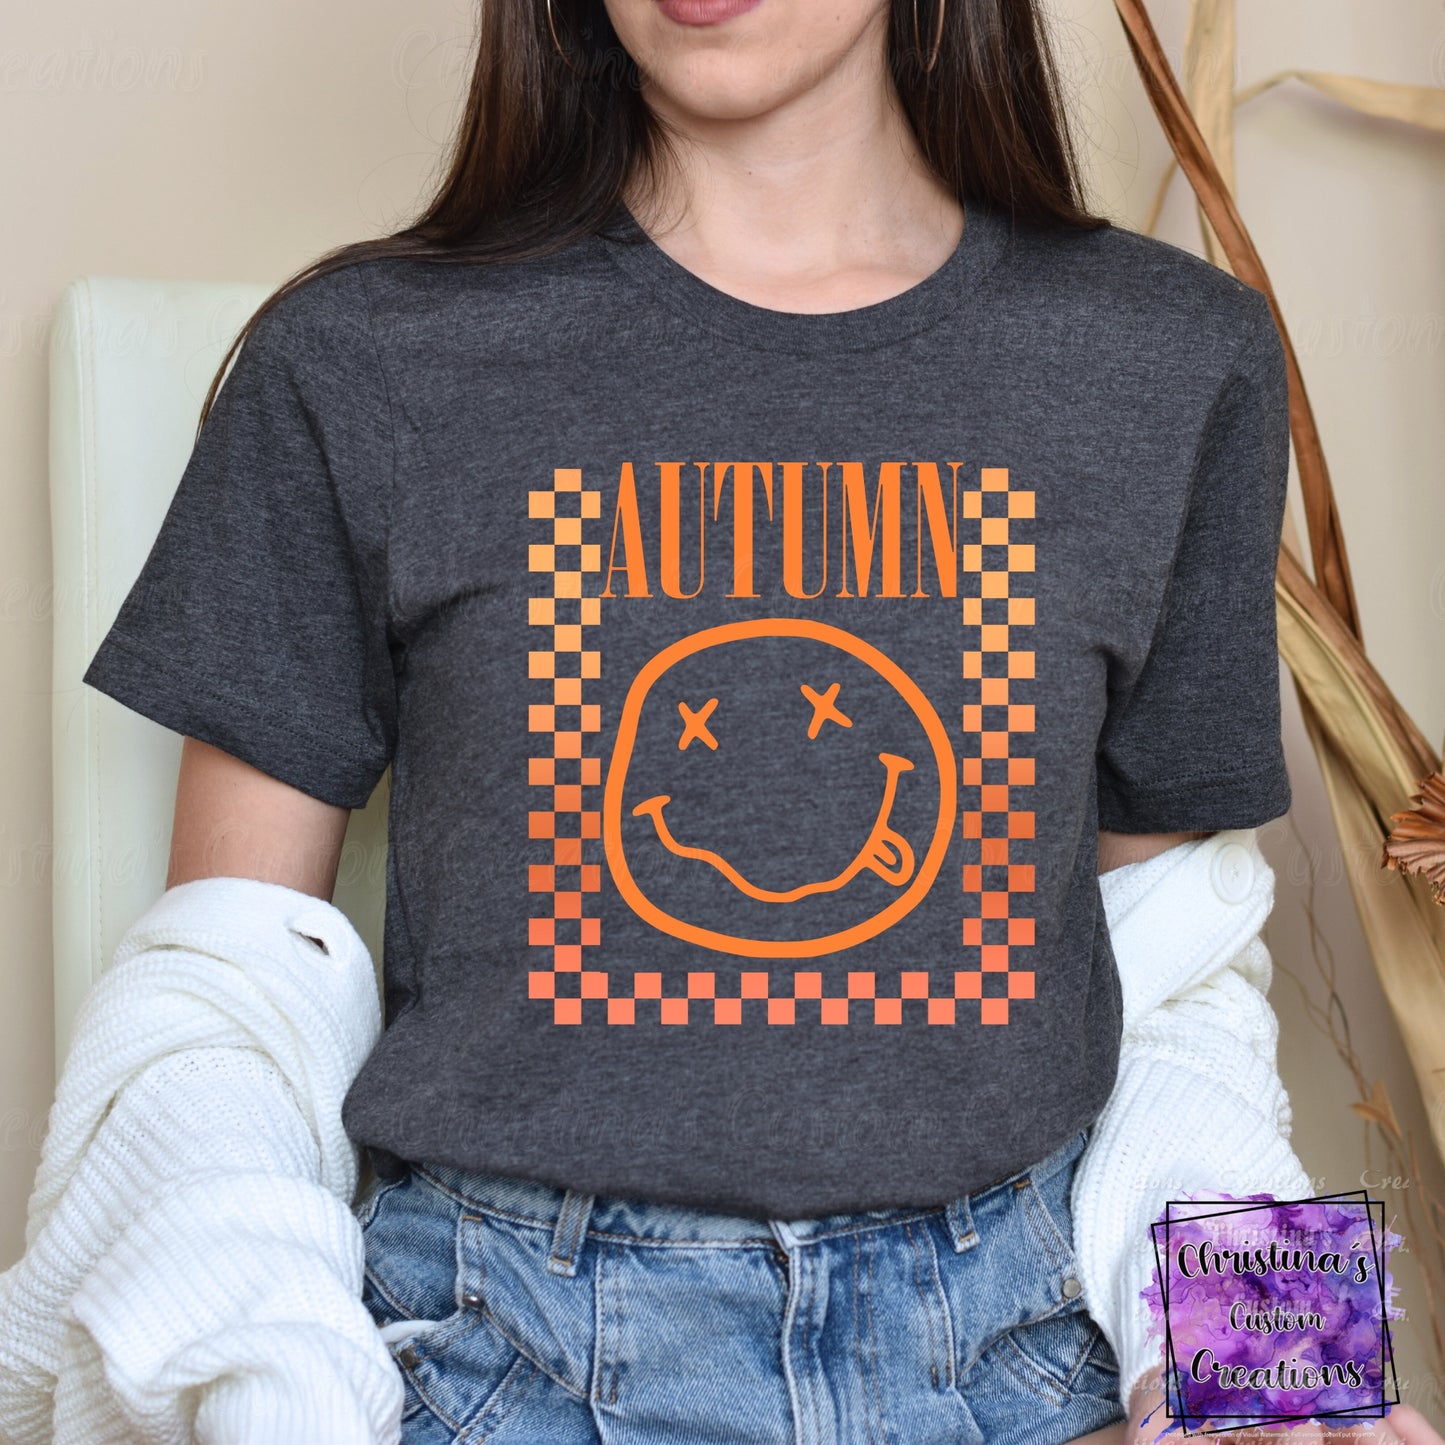 Autumn Smiley T-Shirt | Trendy Autumn/Fall Shirt | Fast Shipping | Super Soft Shirts for Men/Women/Kid's